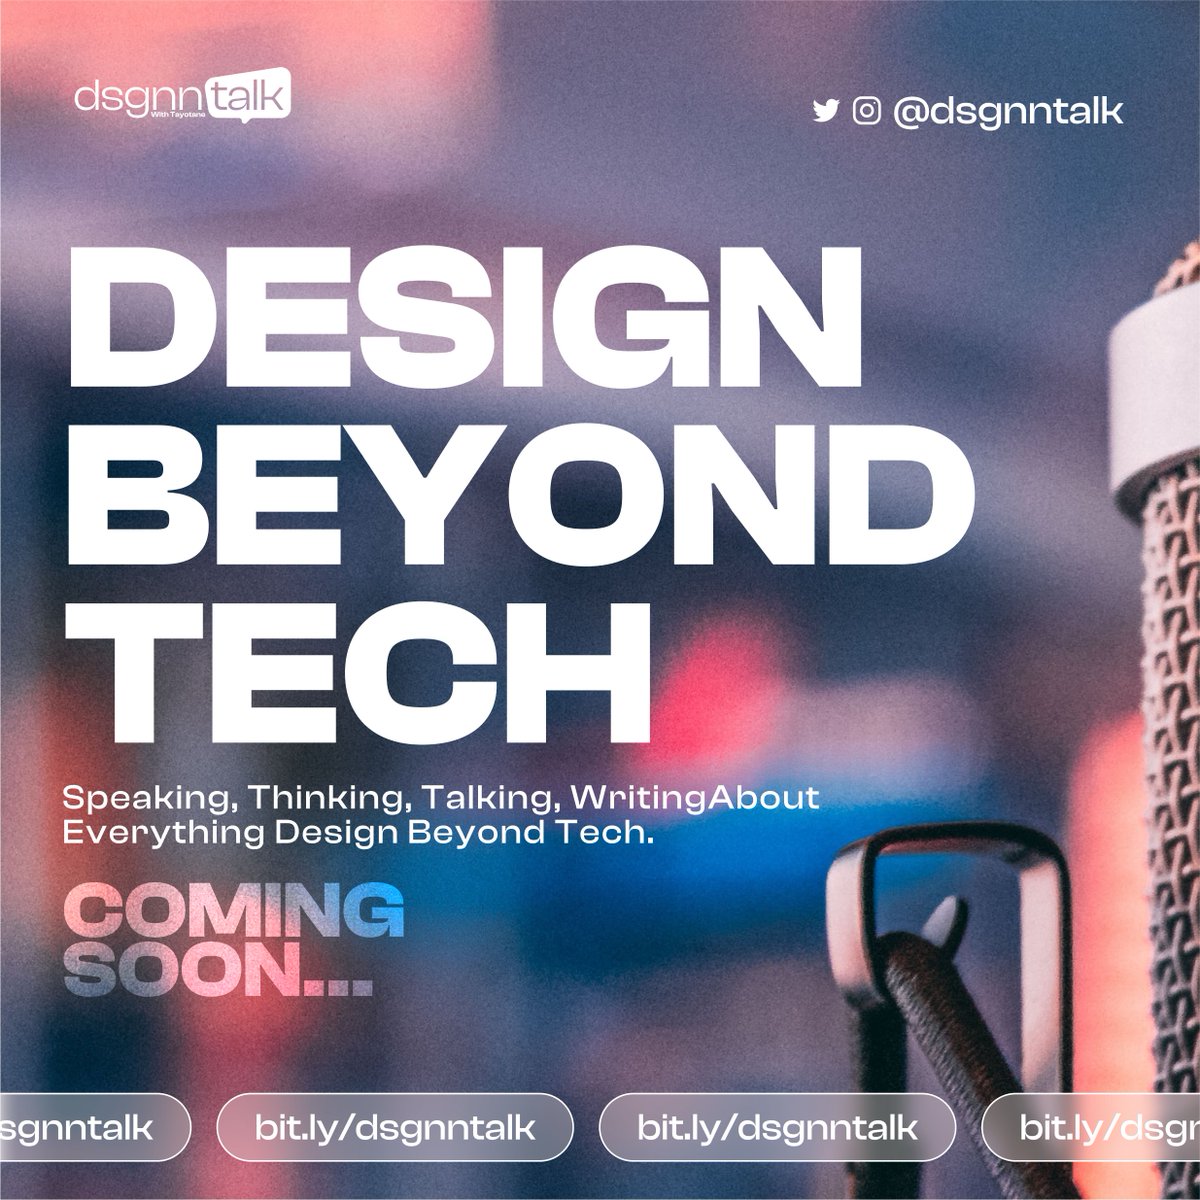 Exploring design beyond what technology alone has to offer. 🔭

#dsgnntalk #designplatform #designcommunity

Follow @dsgnntalk